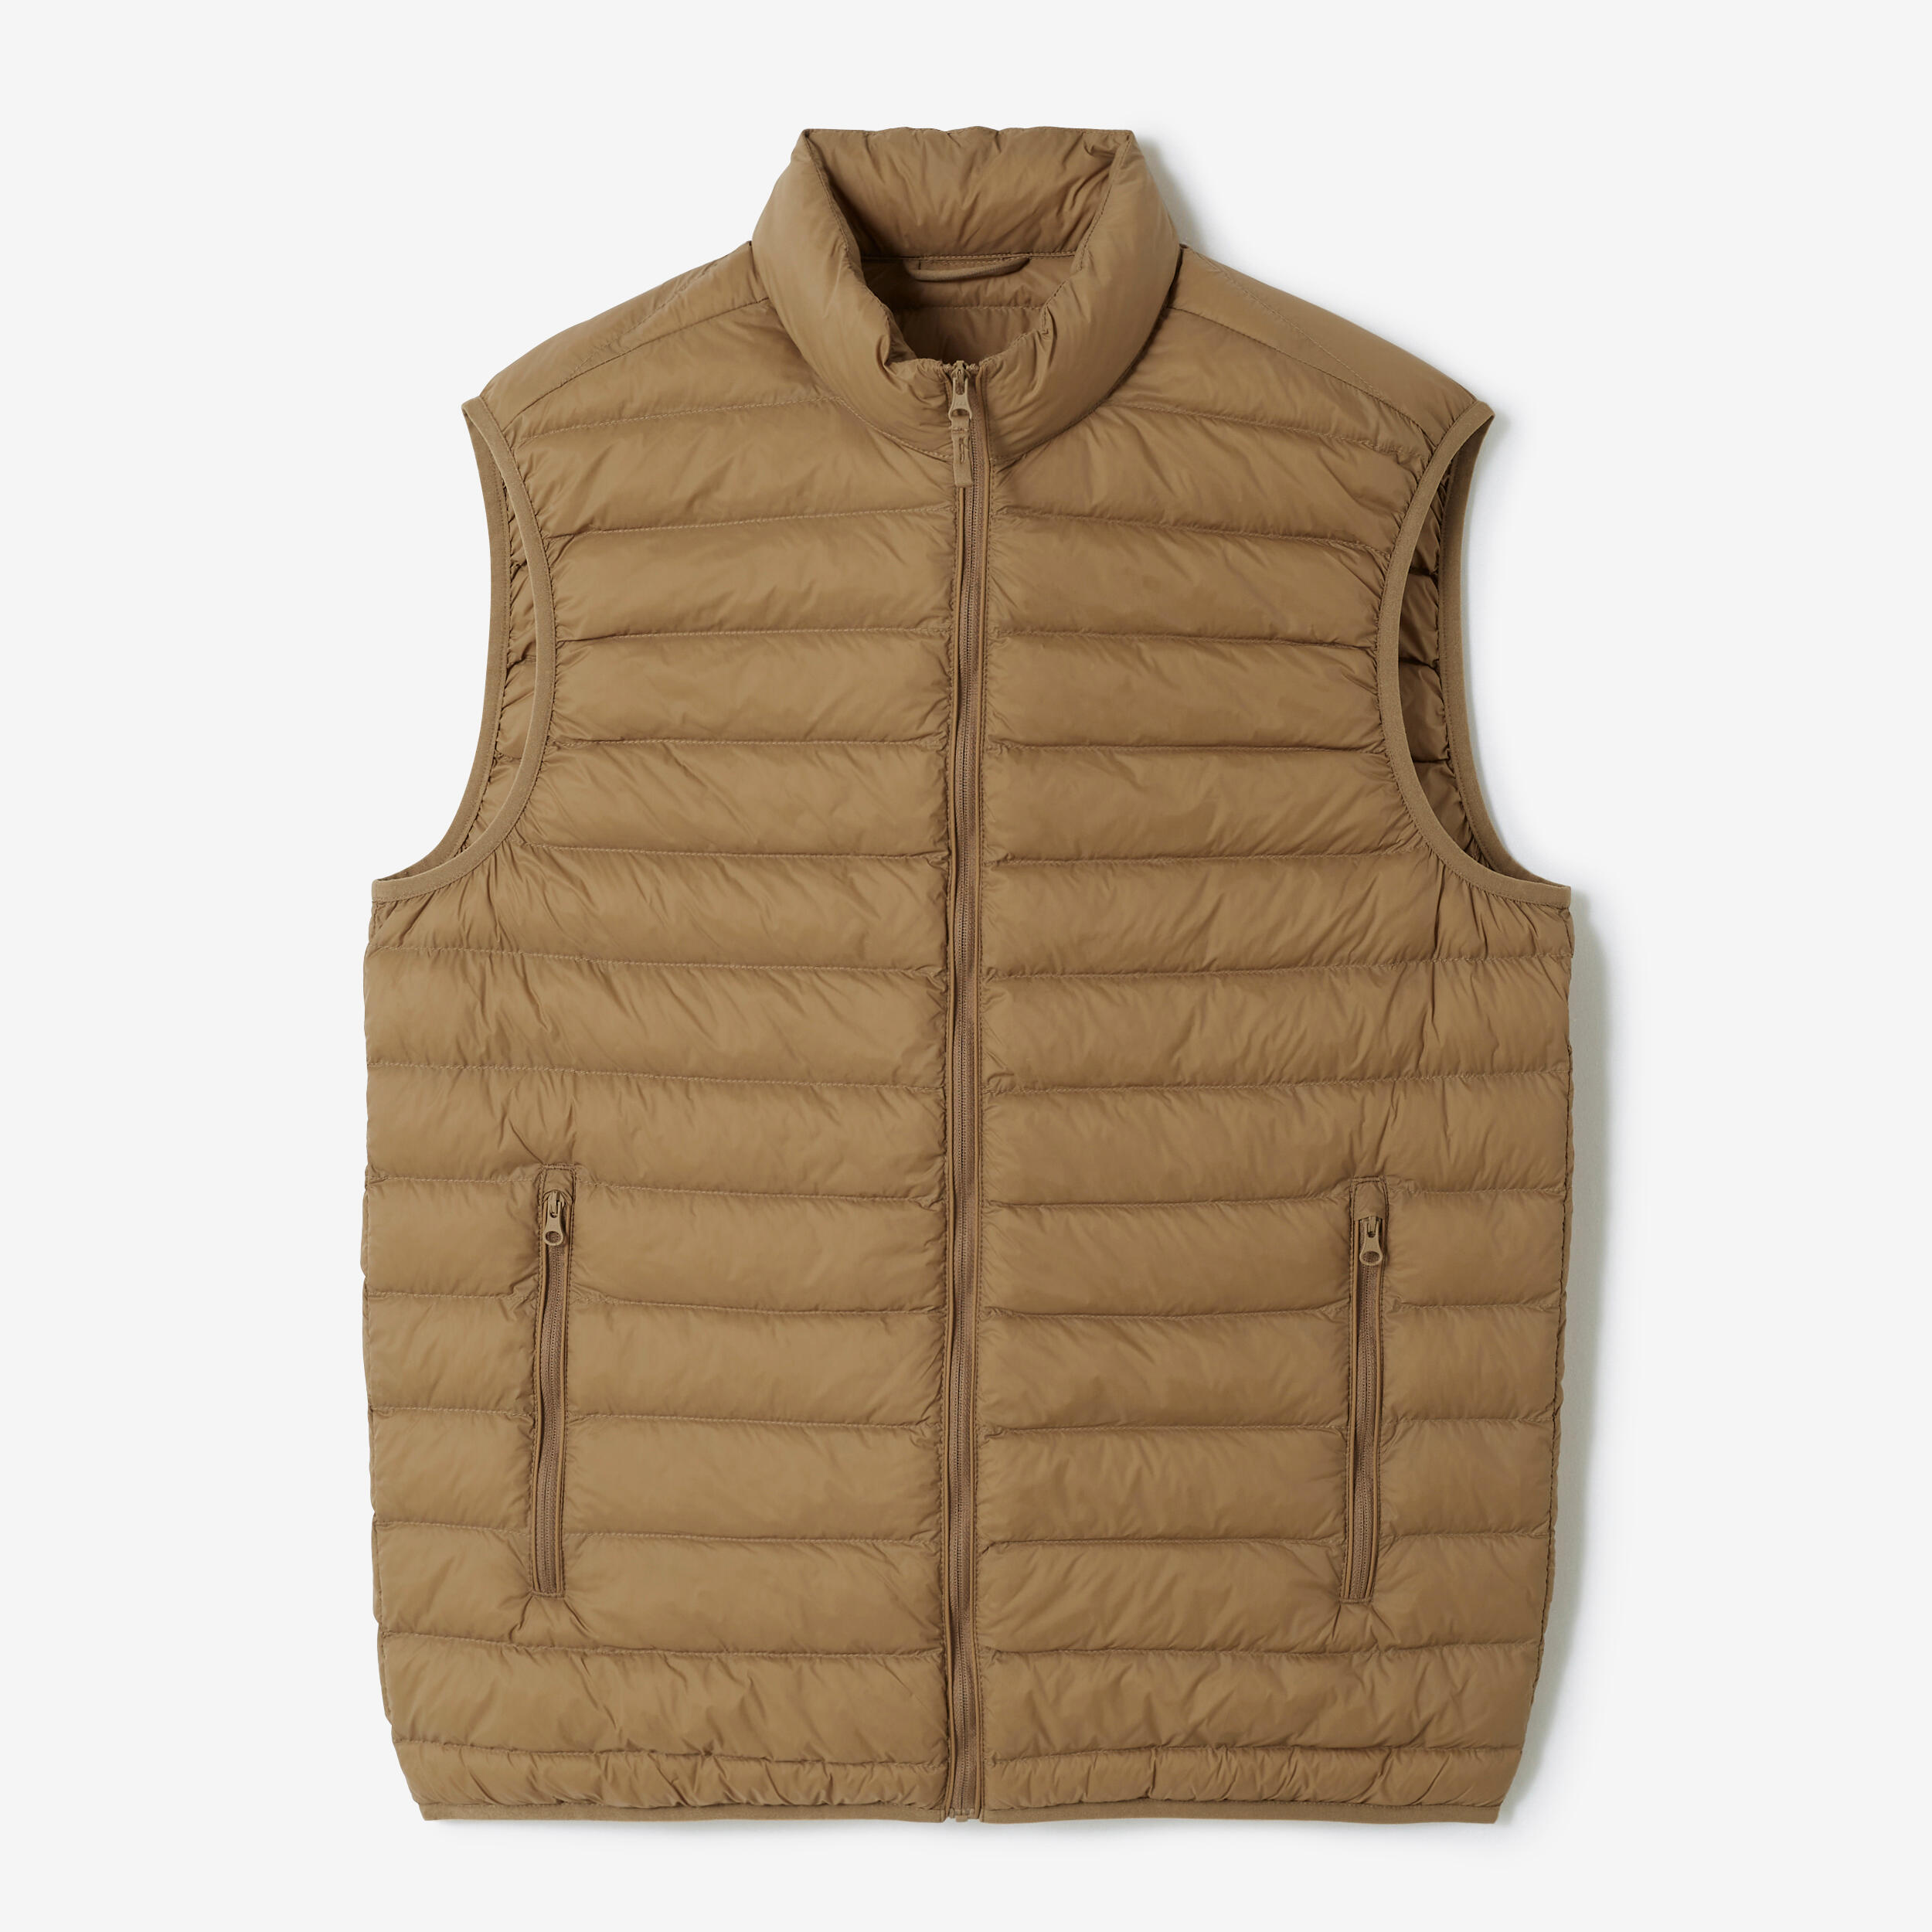 Men's golf sleeveless down jacket - MW500 brown 6/6